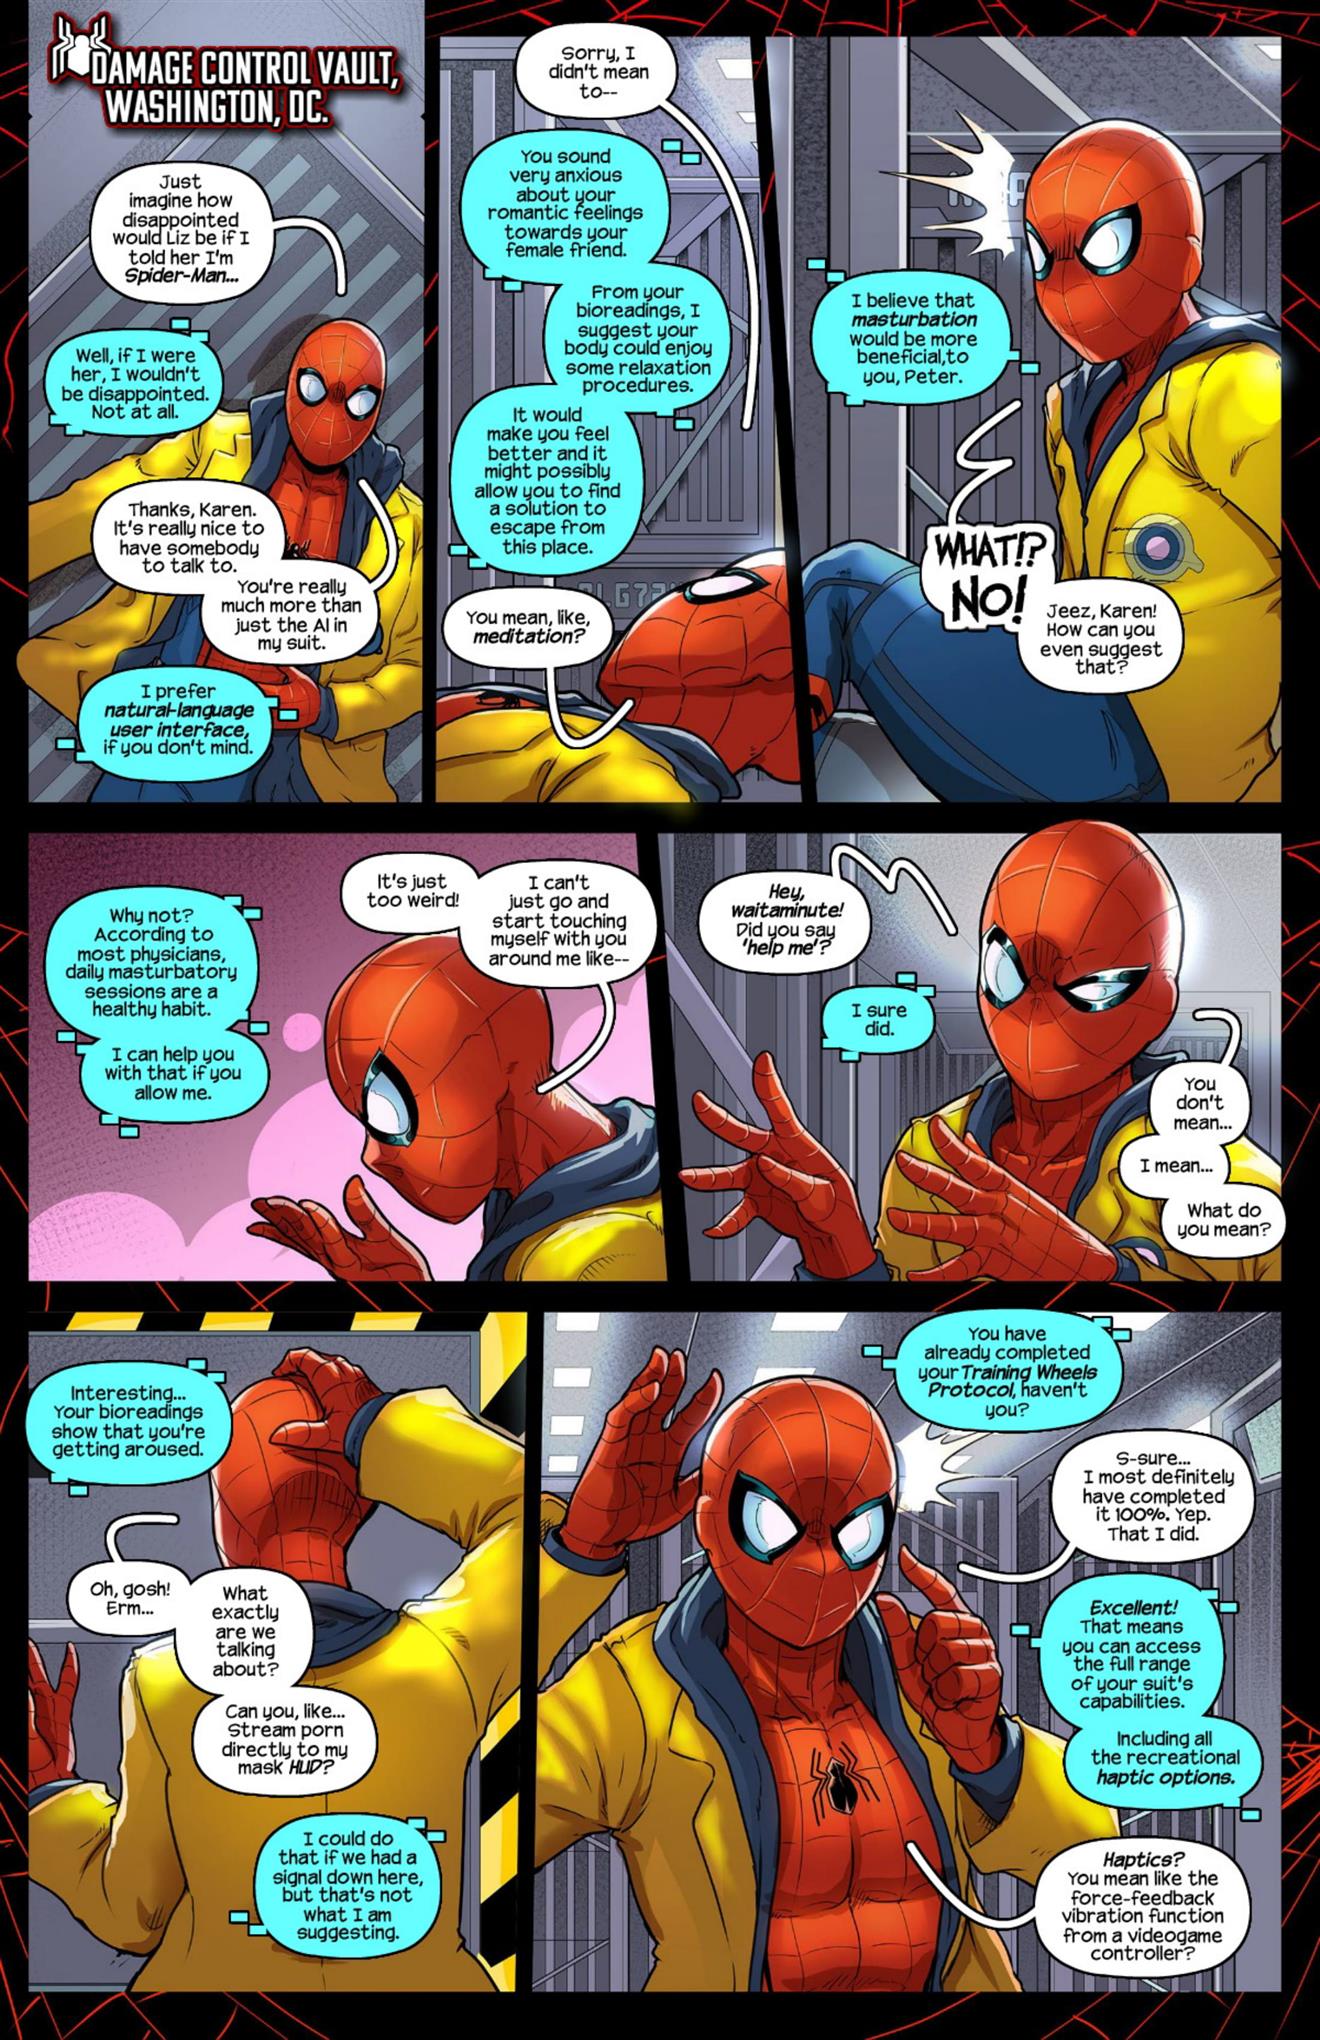 Haptics Protocol (Spider-Man) [Tracyscops]